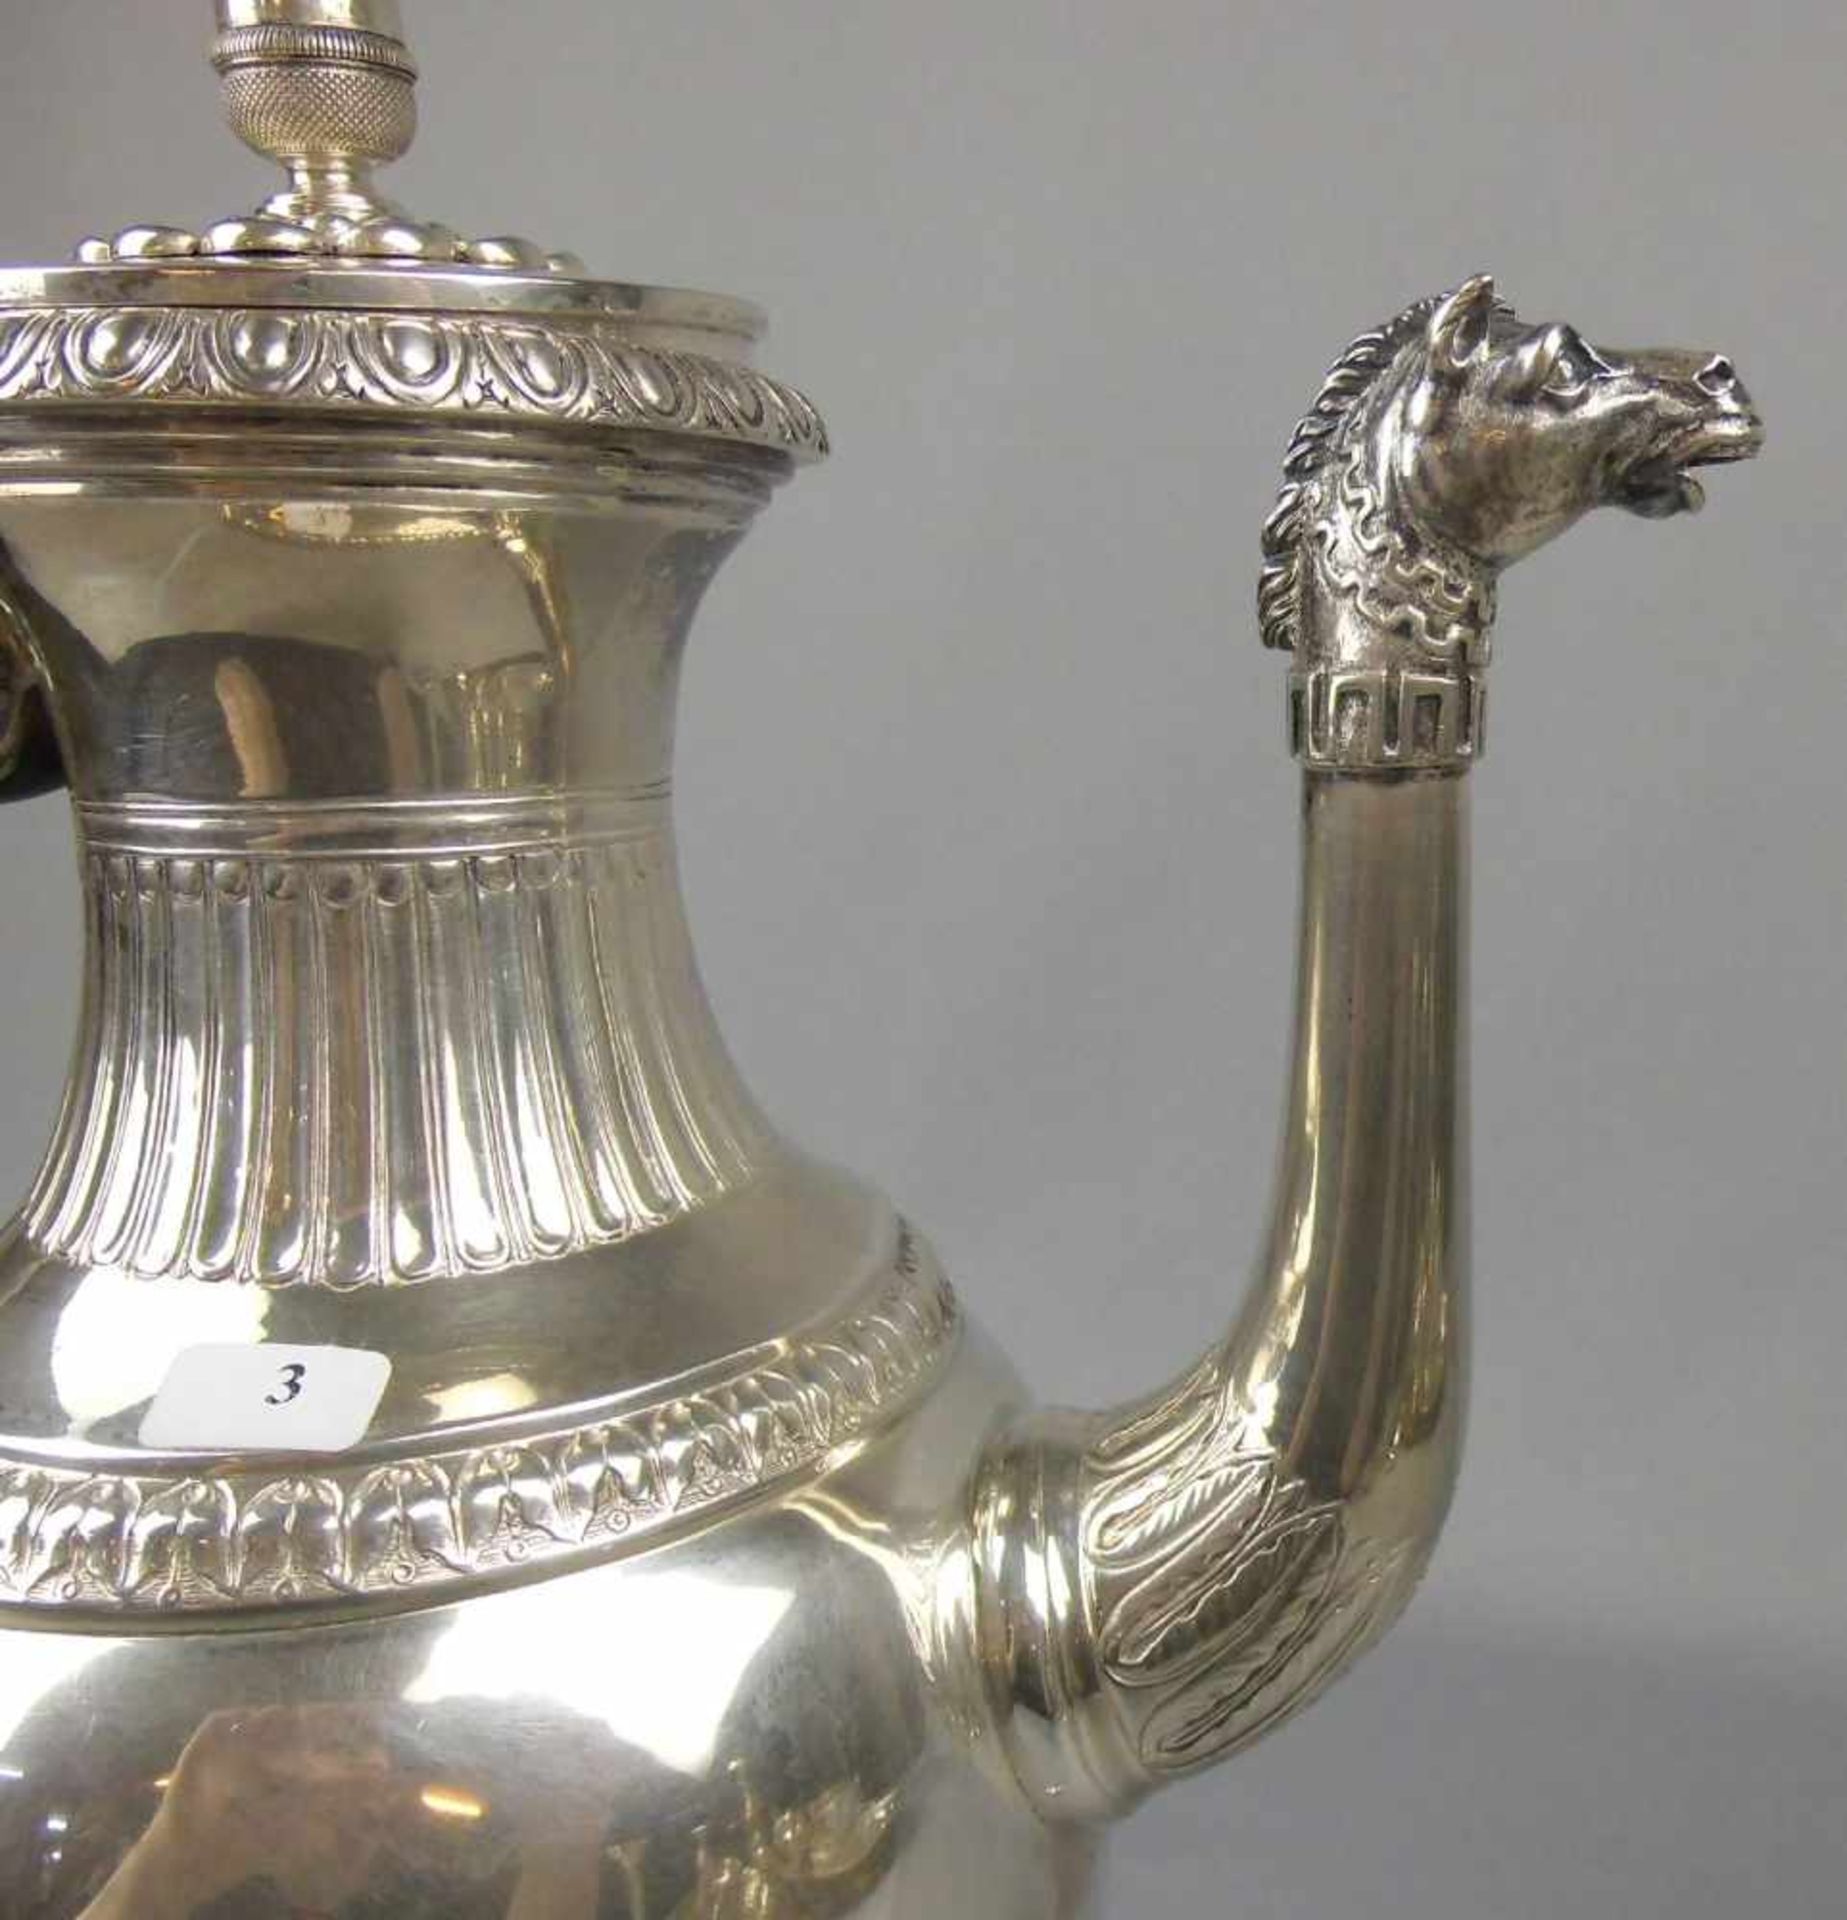 PRÄCHTIGE EMPIRE KAFFEE - KANNE AUS ADELSBESITZ / silver empire coffee pot from nobility estates, - Image 13 of 15